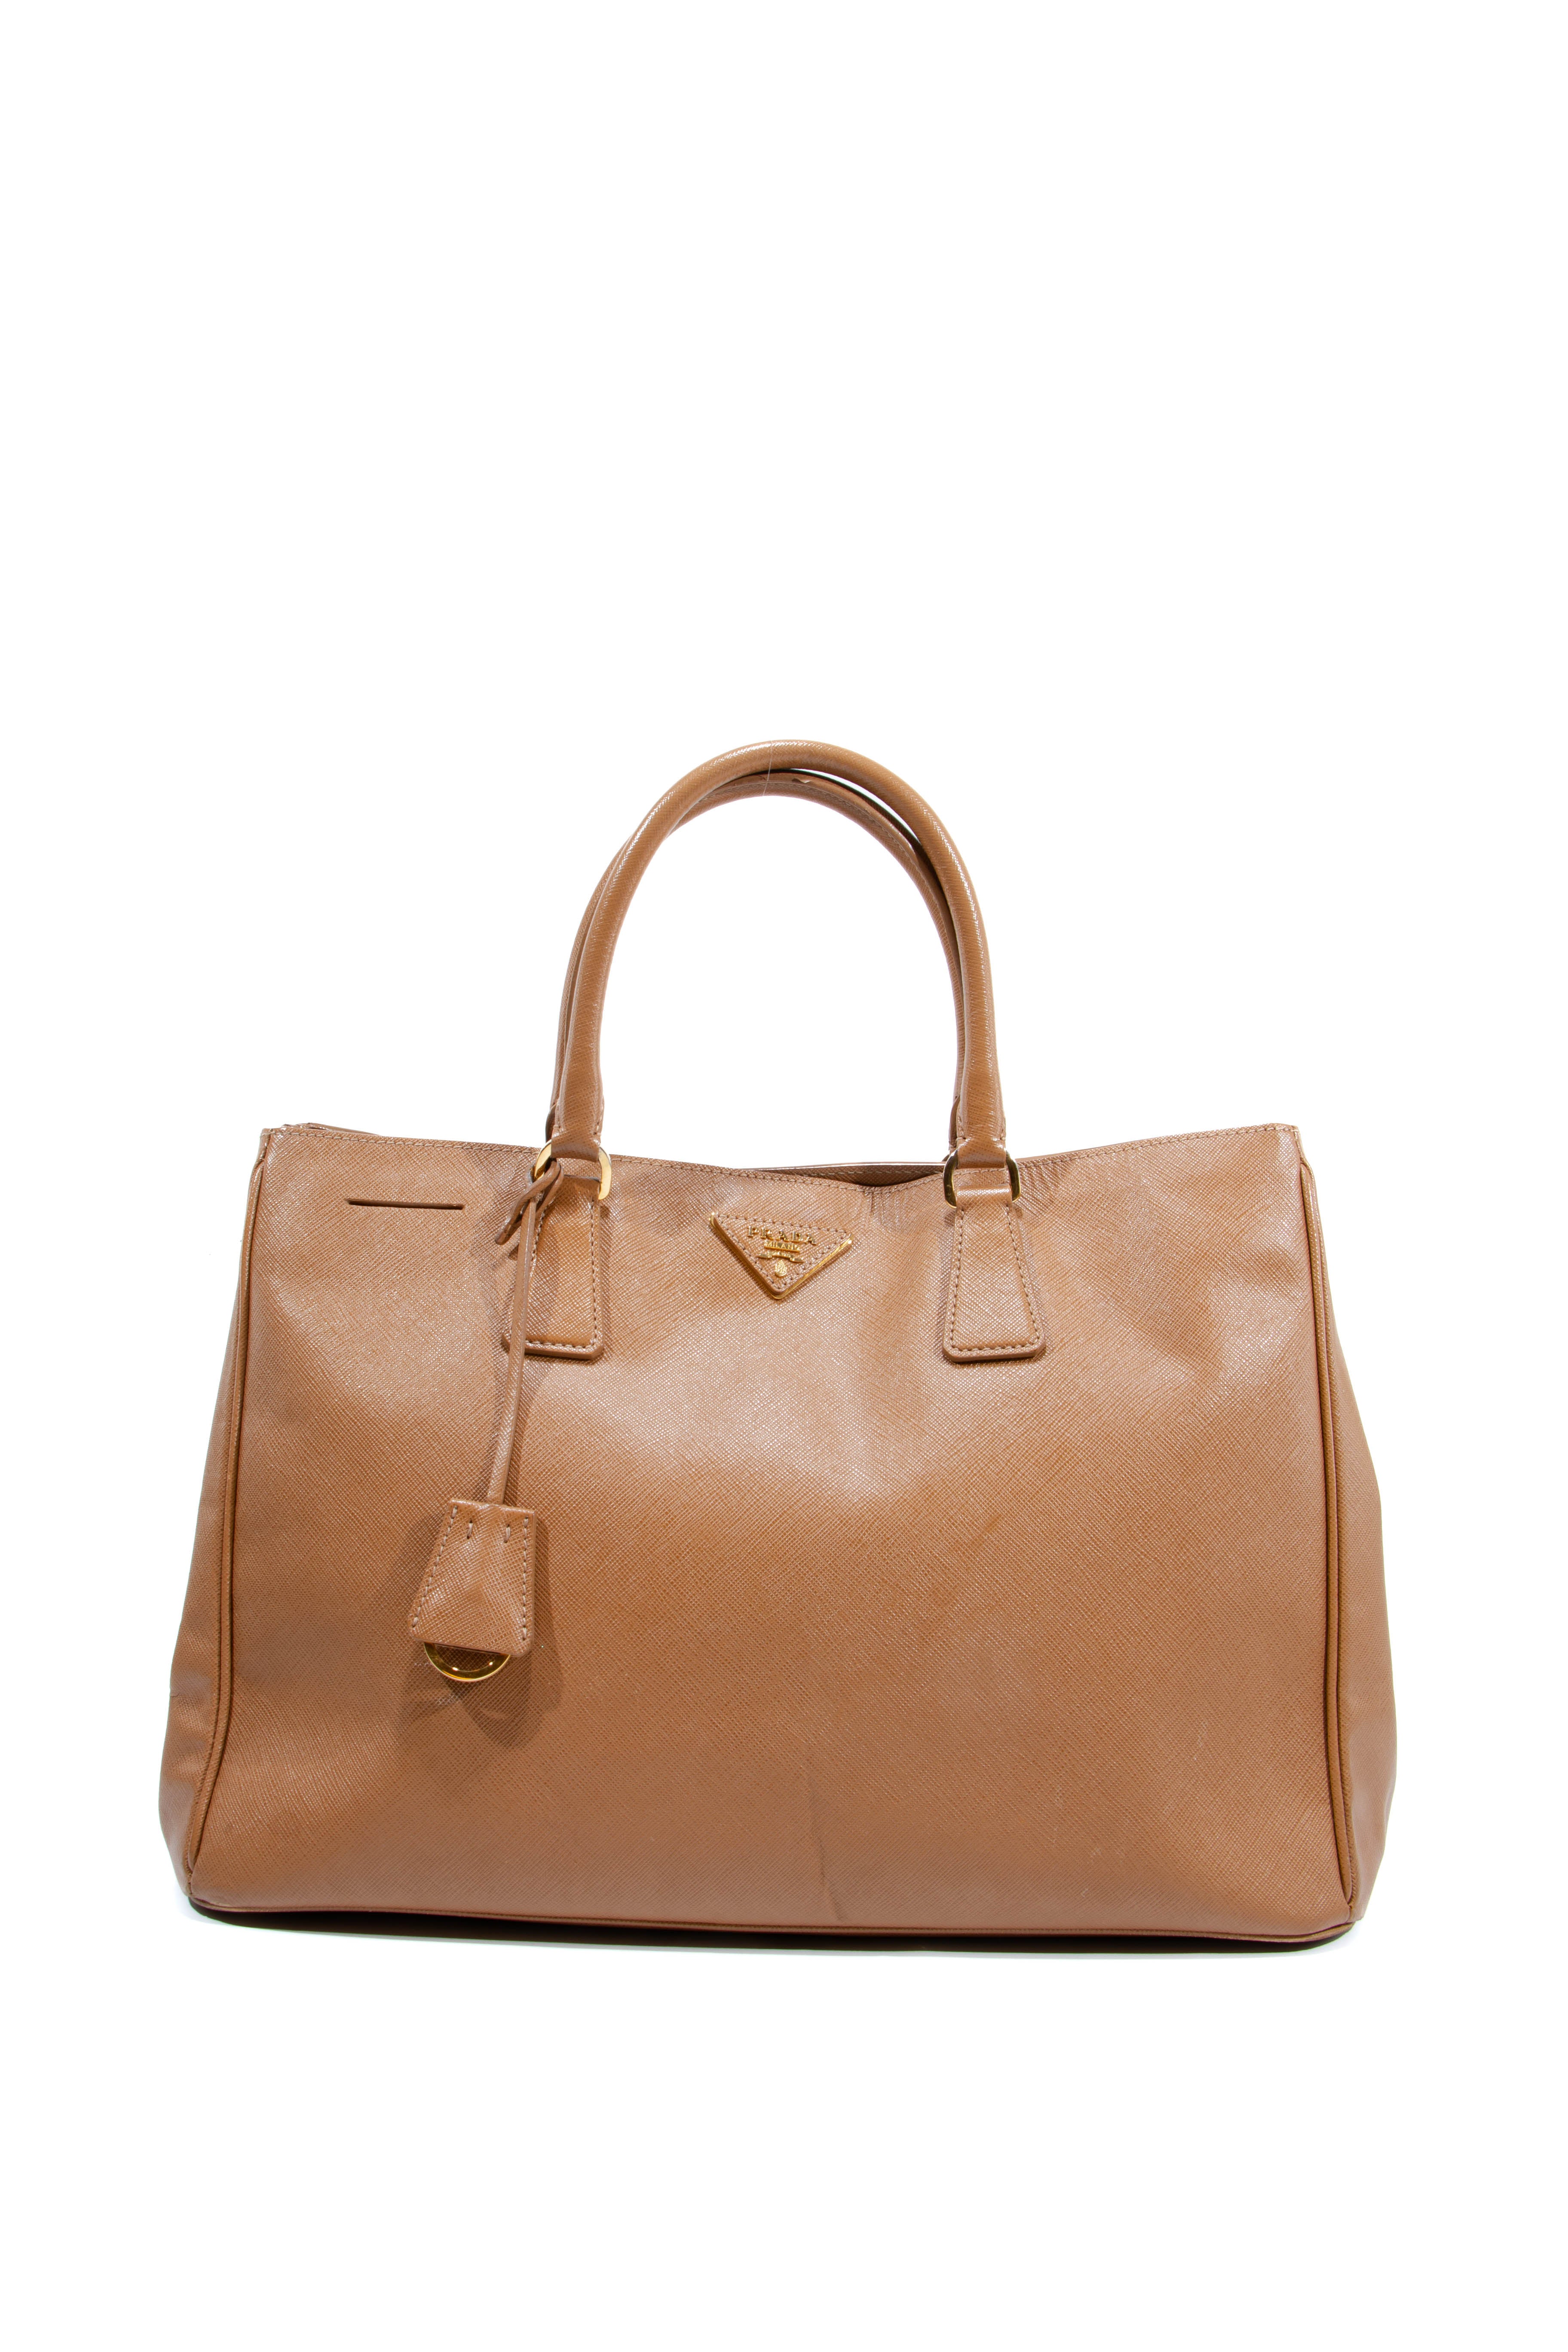 Prada Symbole small handbag for Women - Black in KSA | Level Shoes